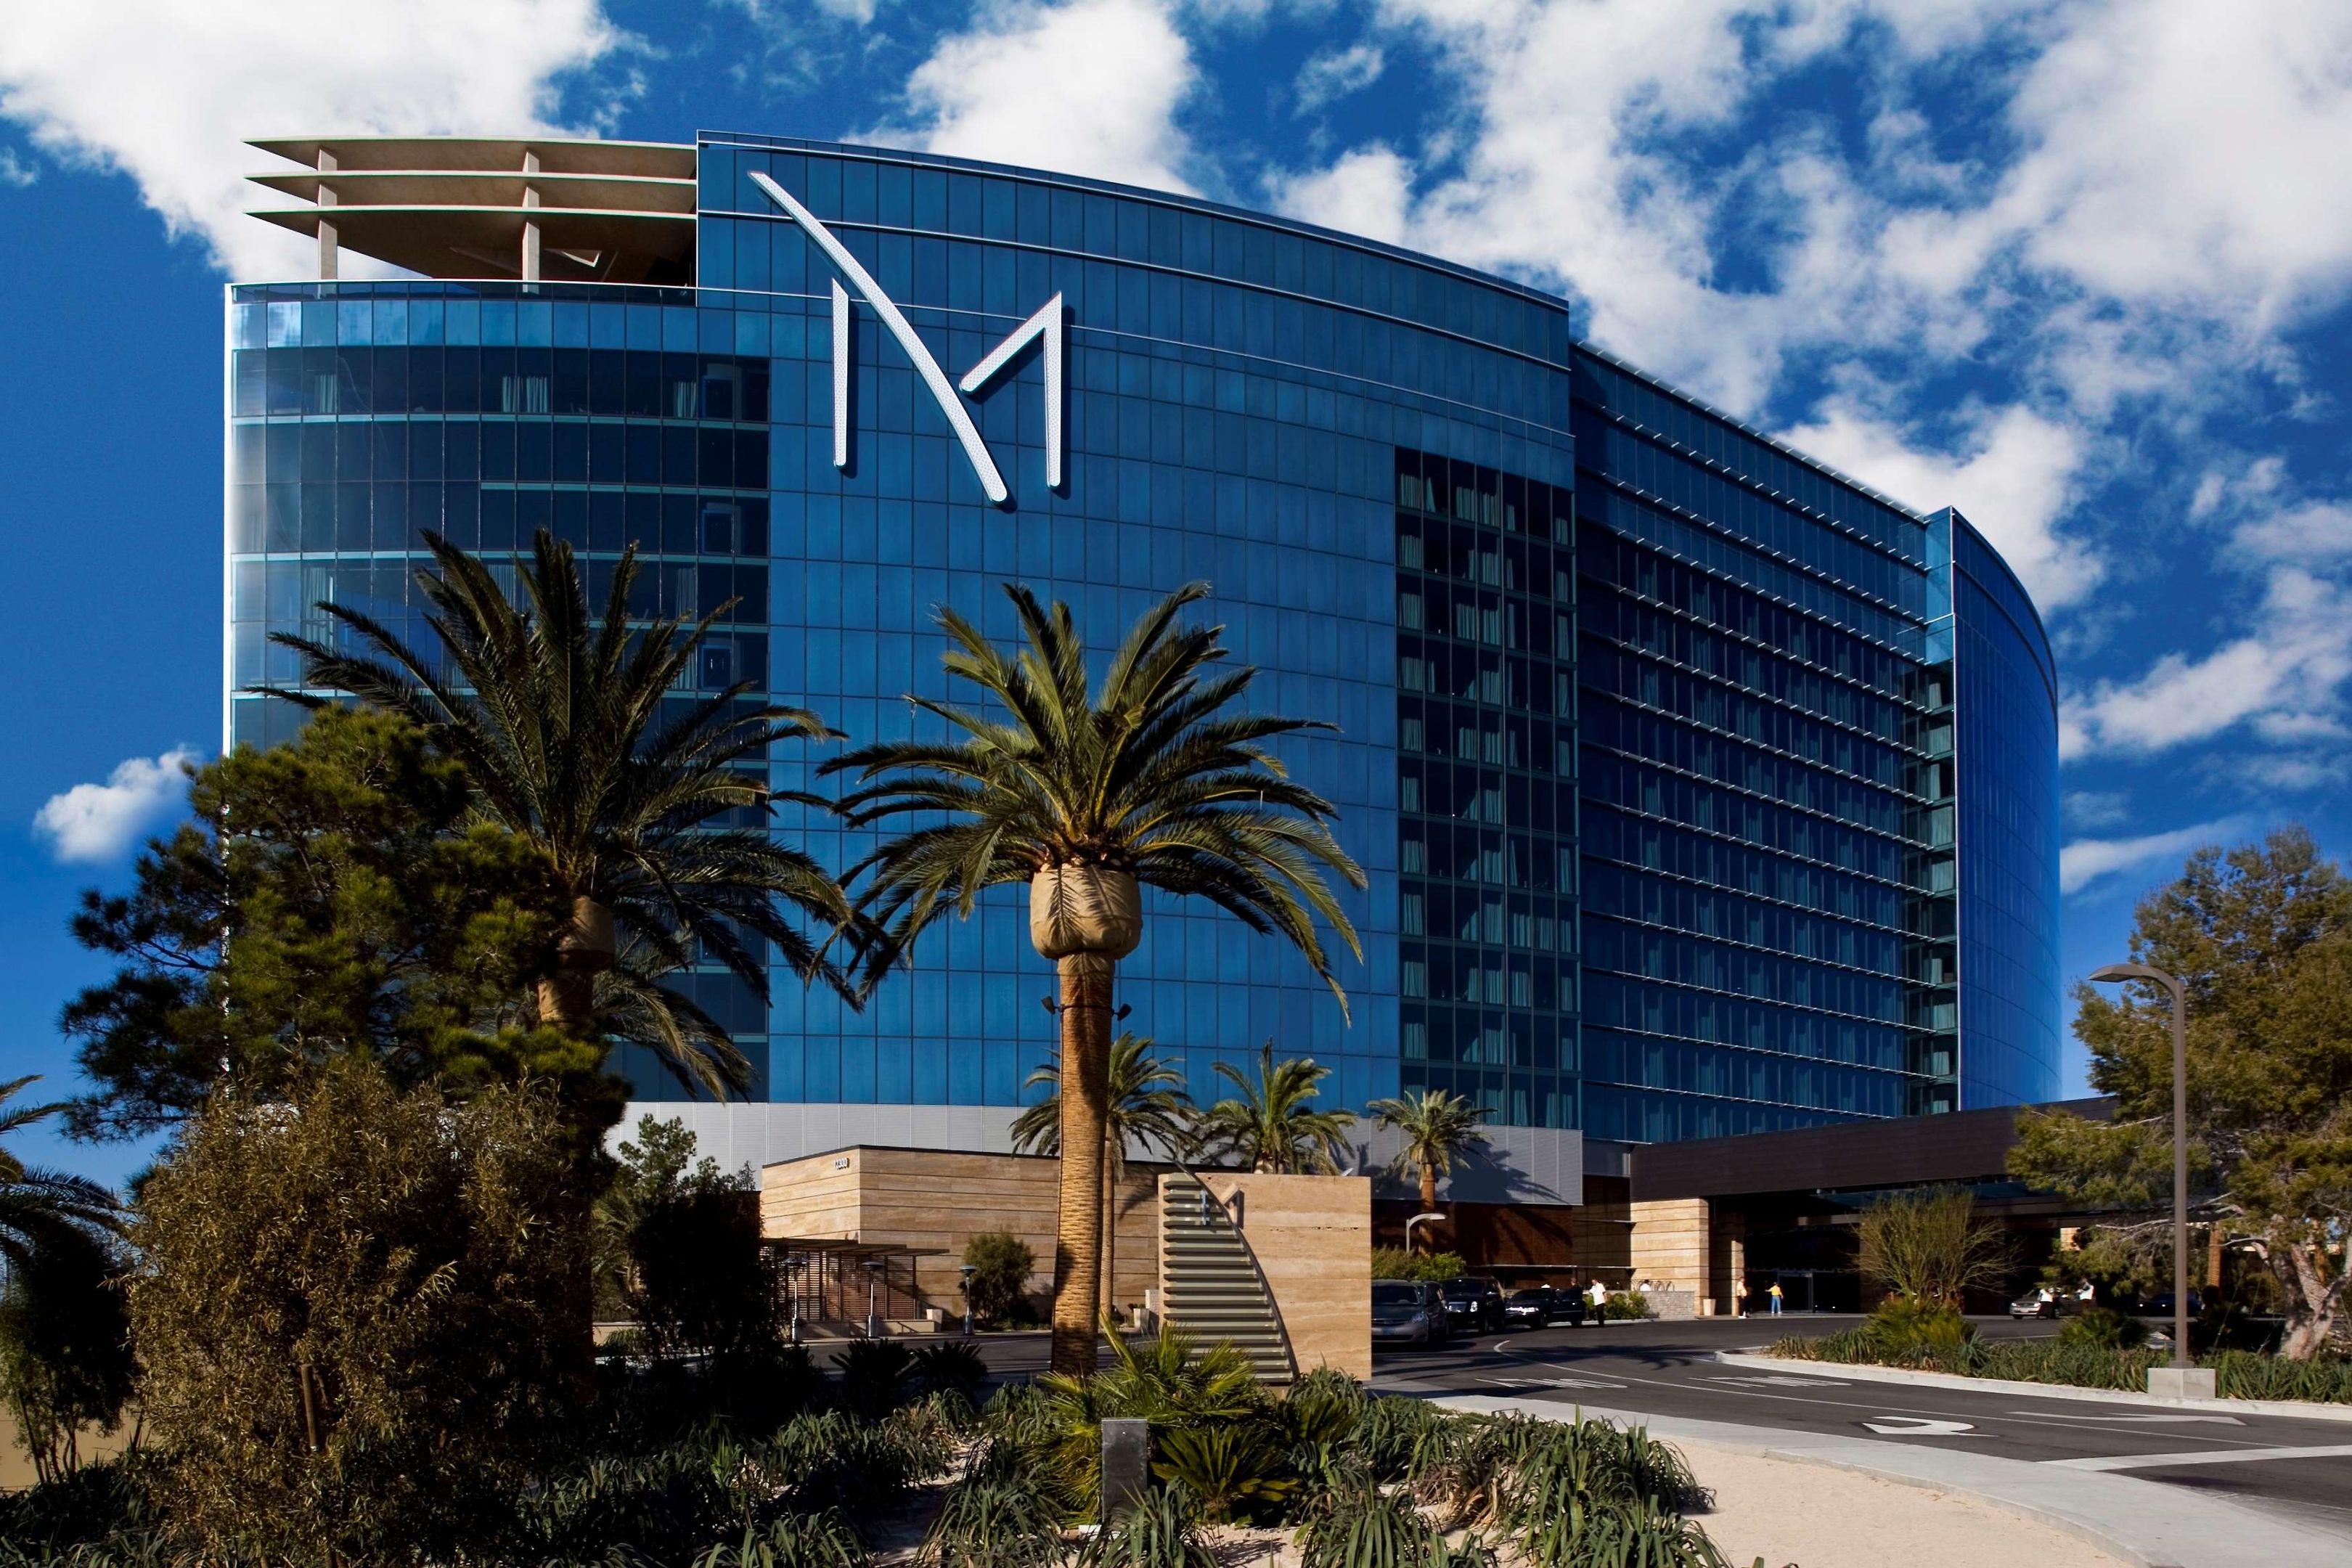 The M Resort Spa & Casino